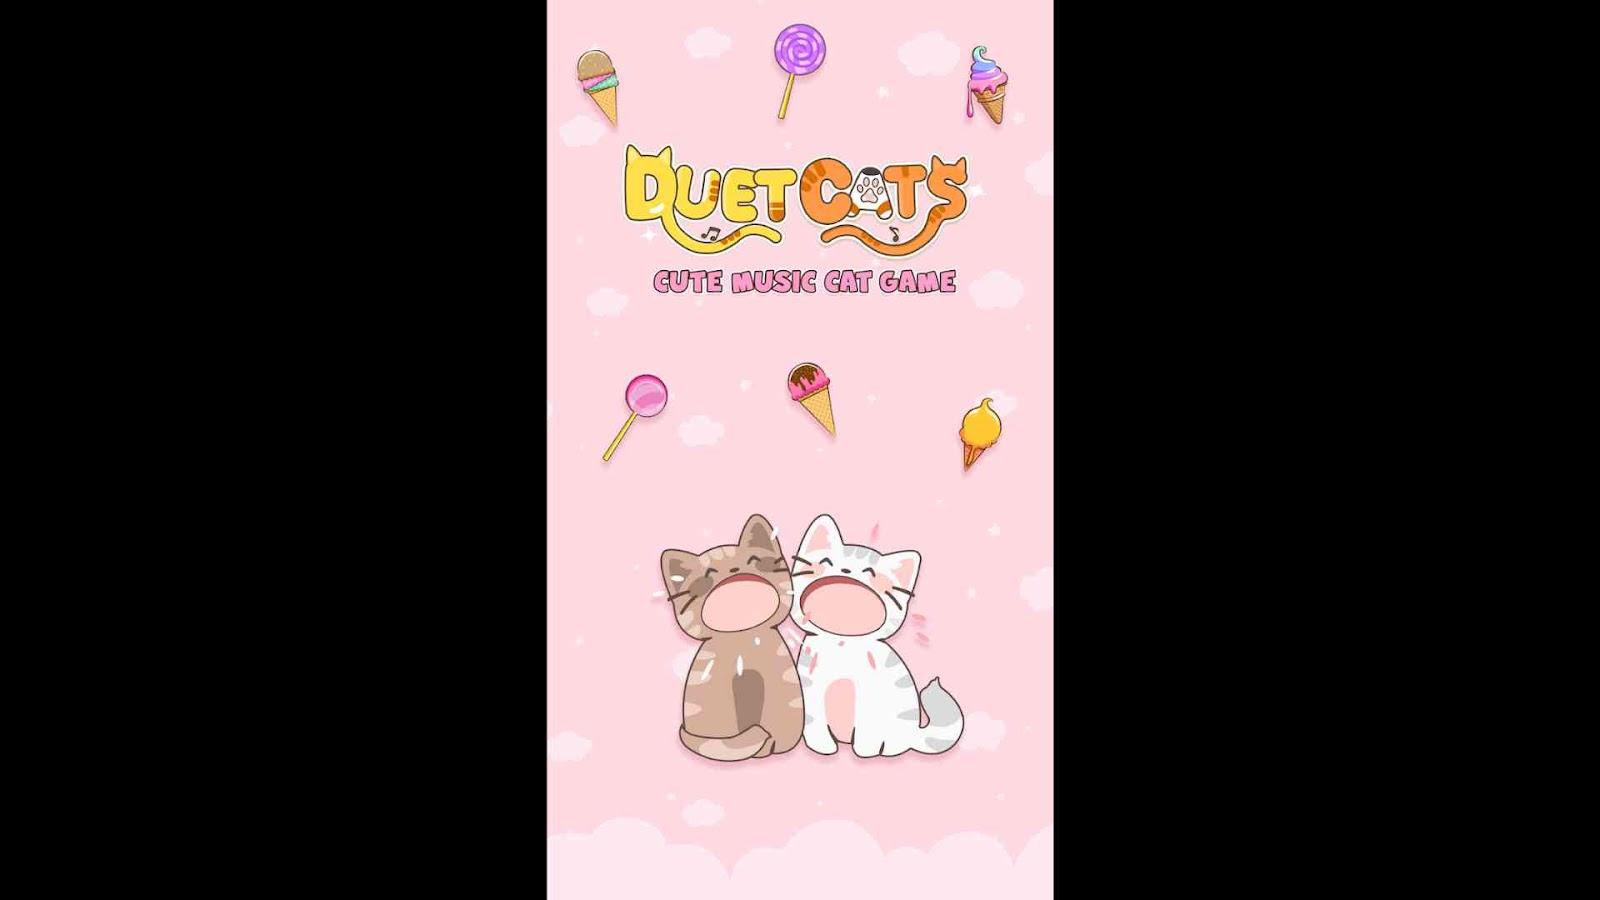  Duel Cats: Cute Popcat Music